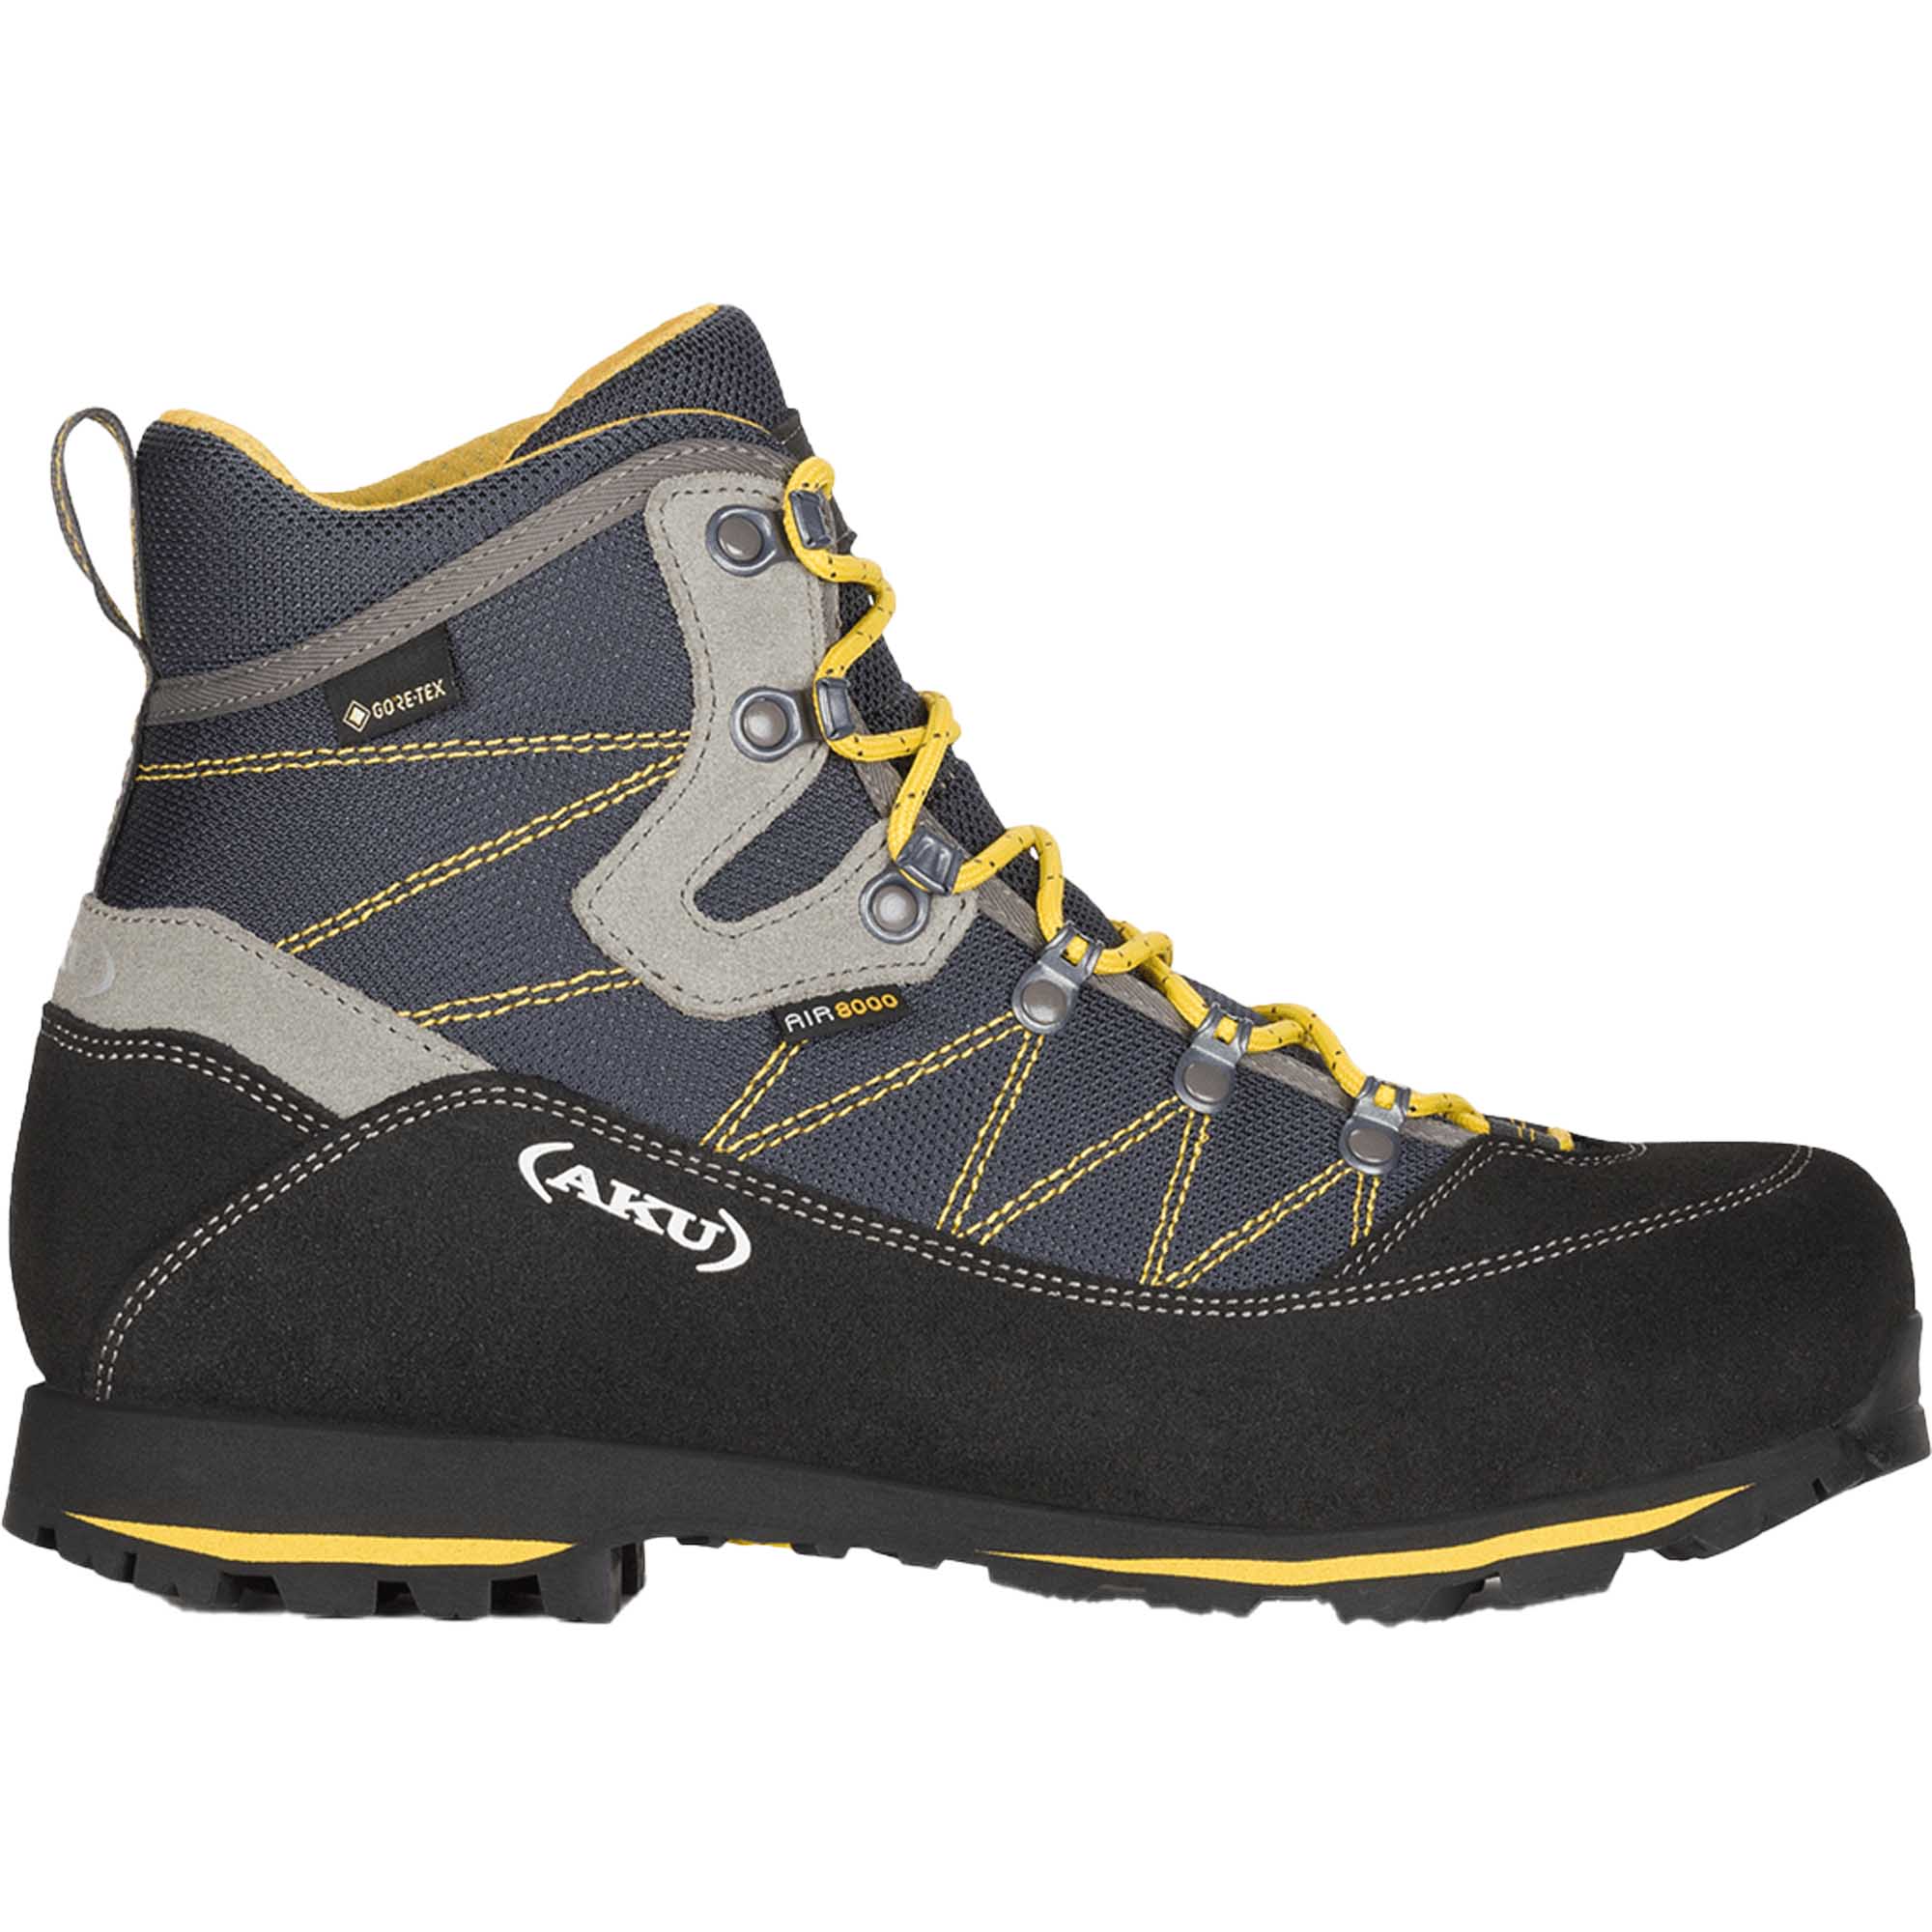 Aku Trekker Lite III GTX Hiking Boots